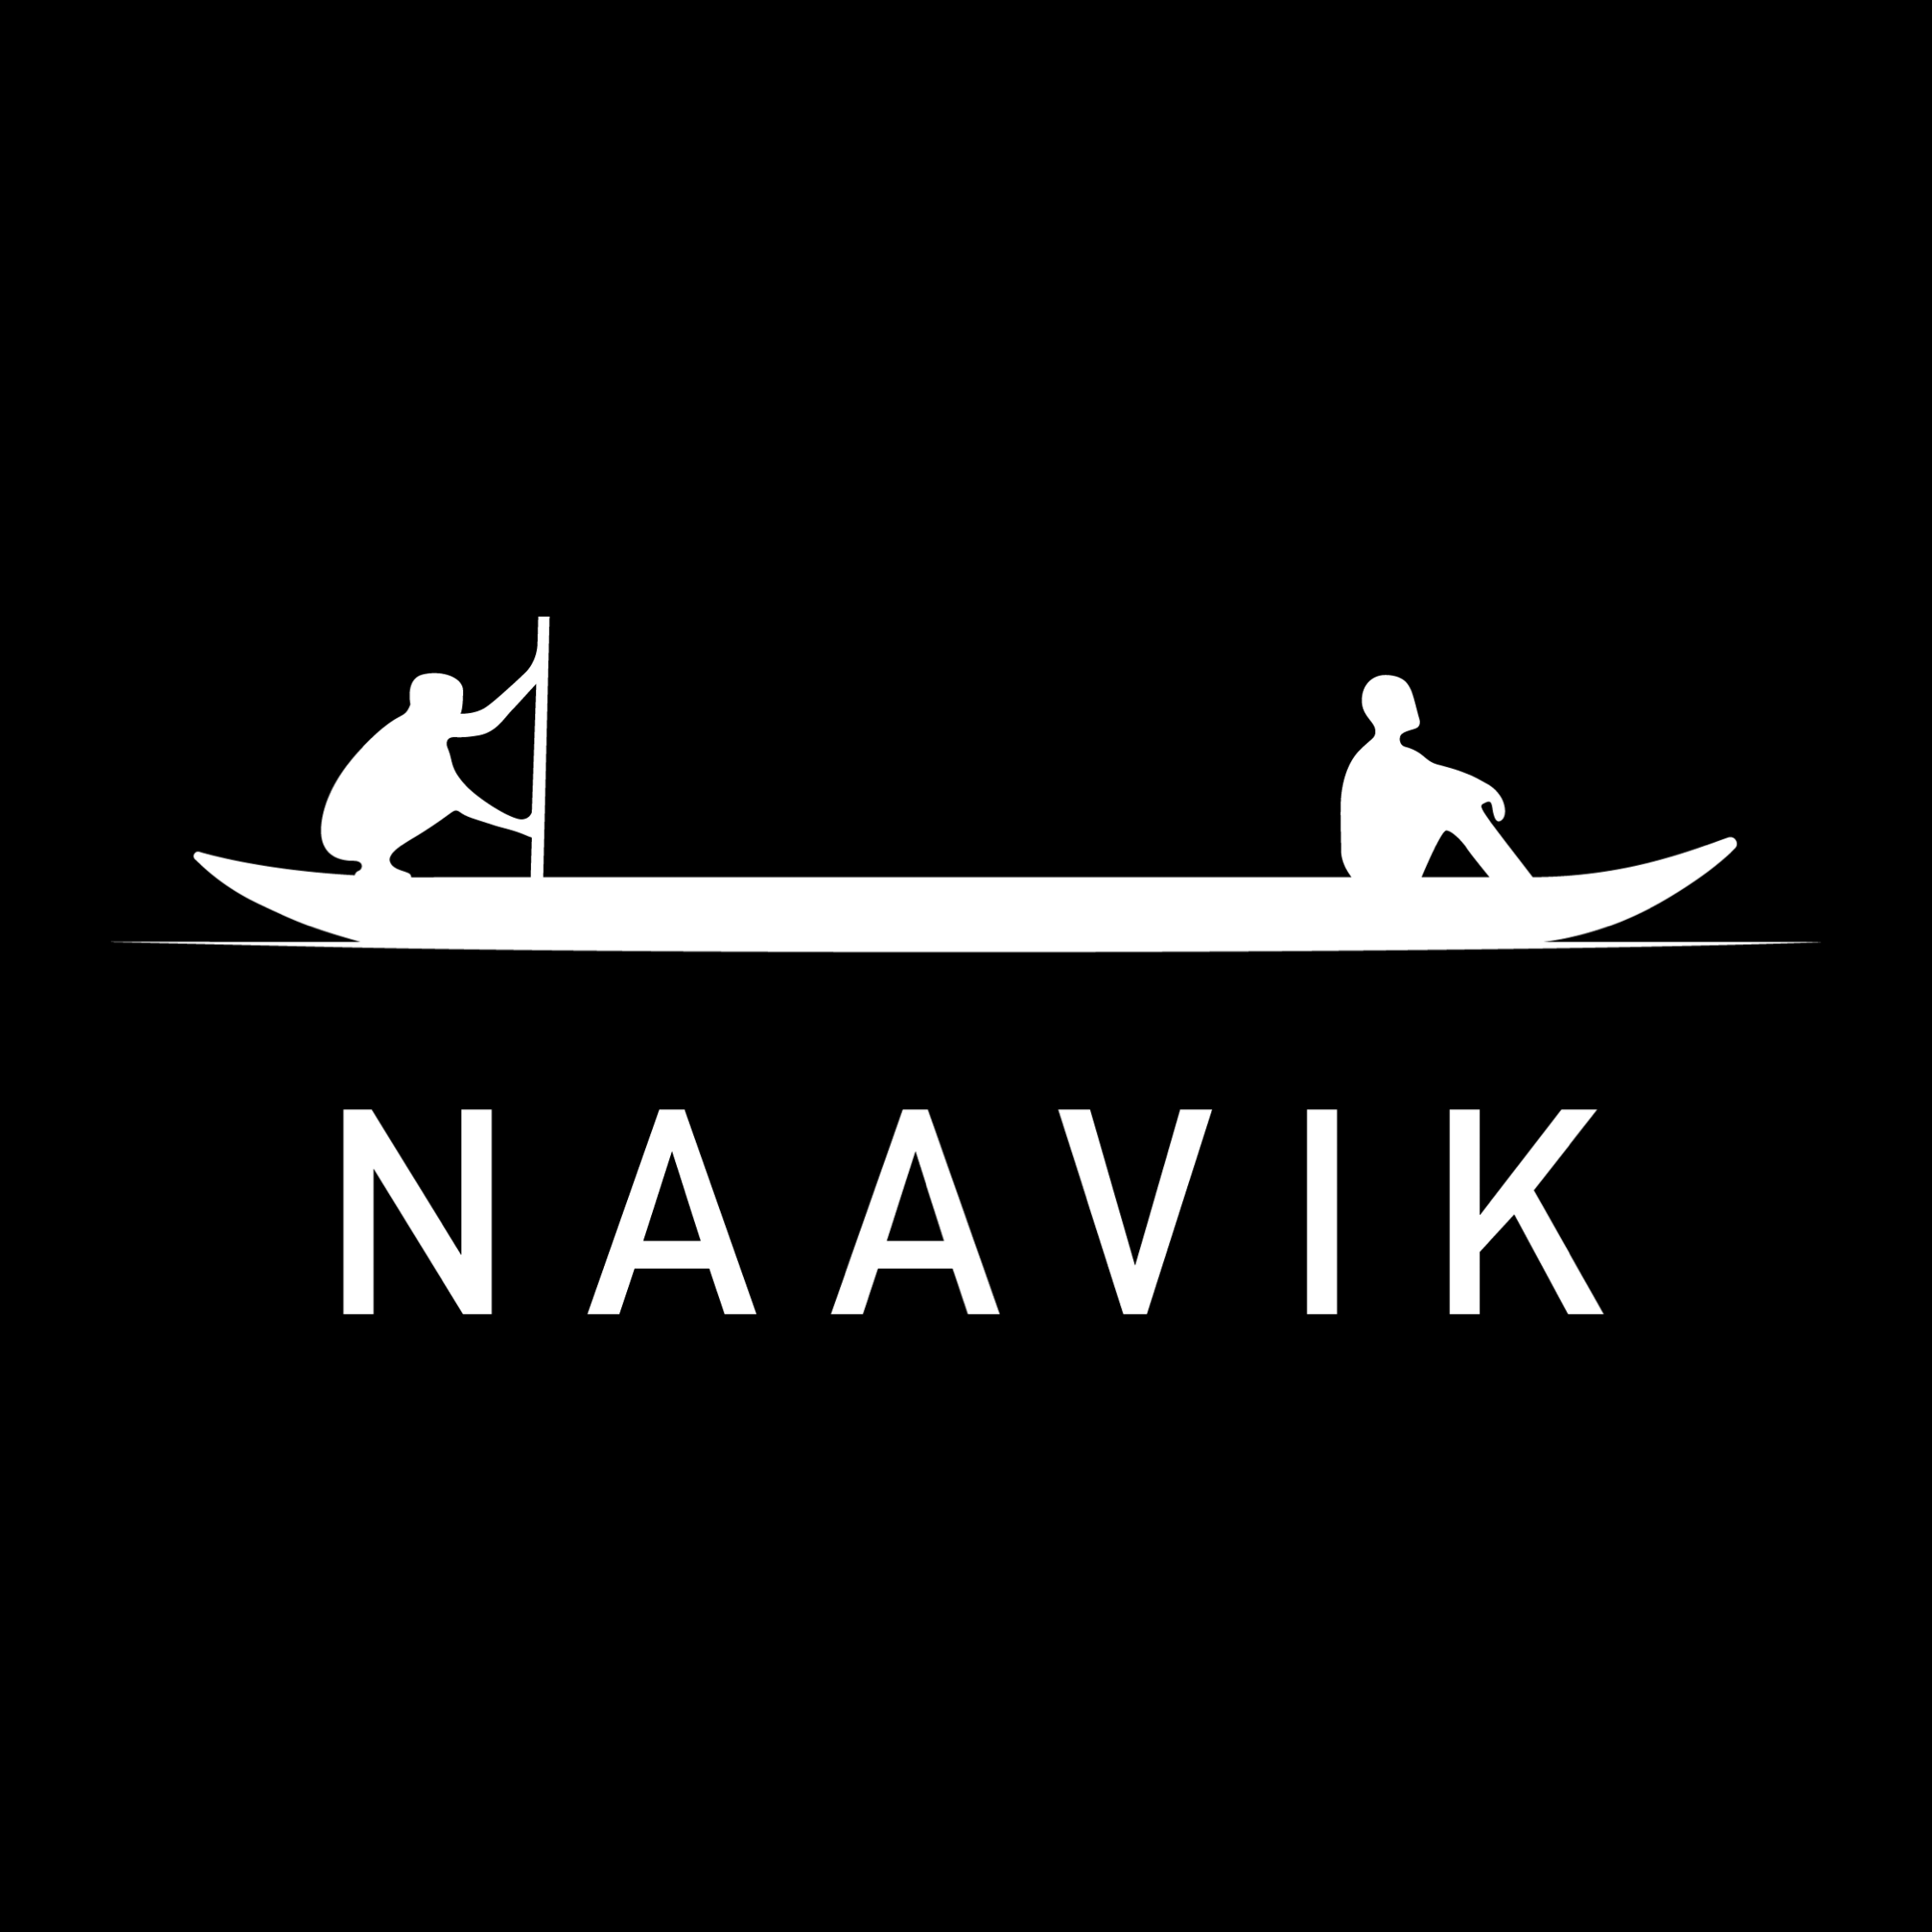 Naavik+-+Square+-+White+on+Black.png